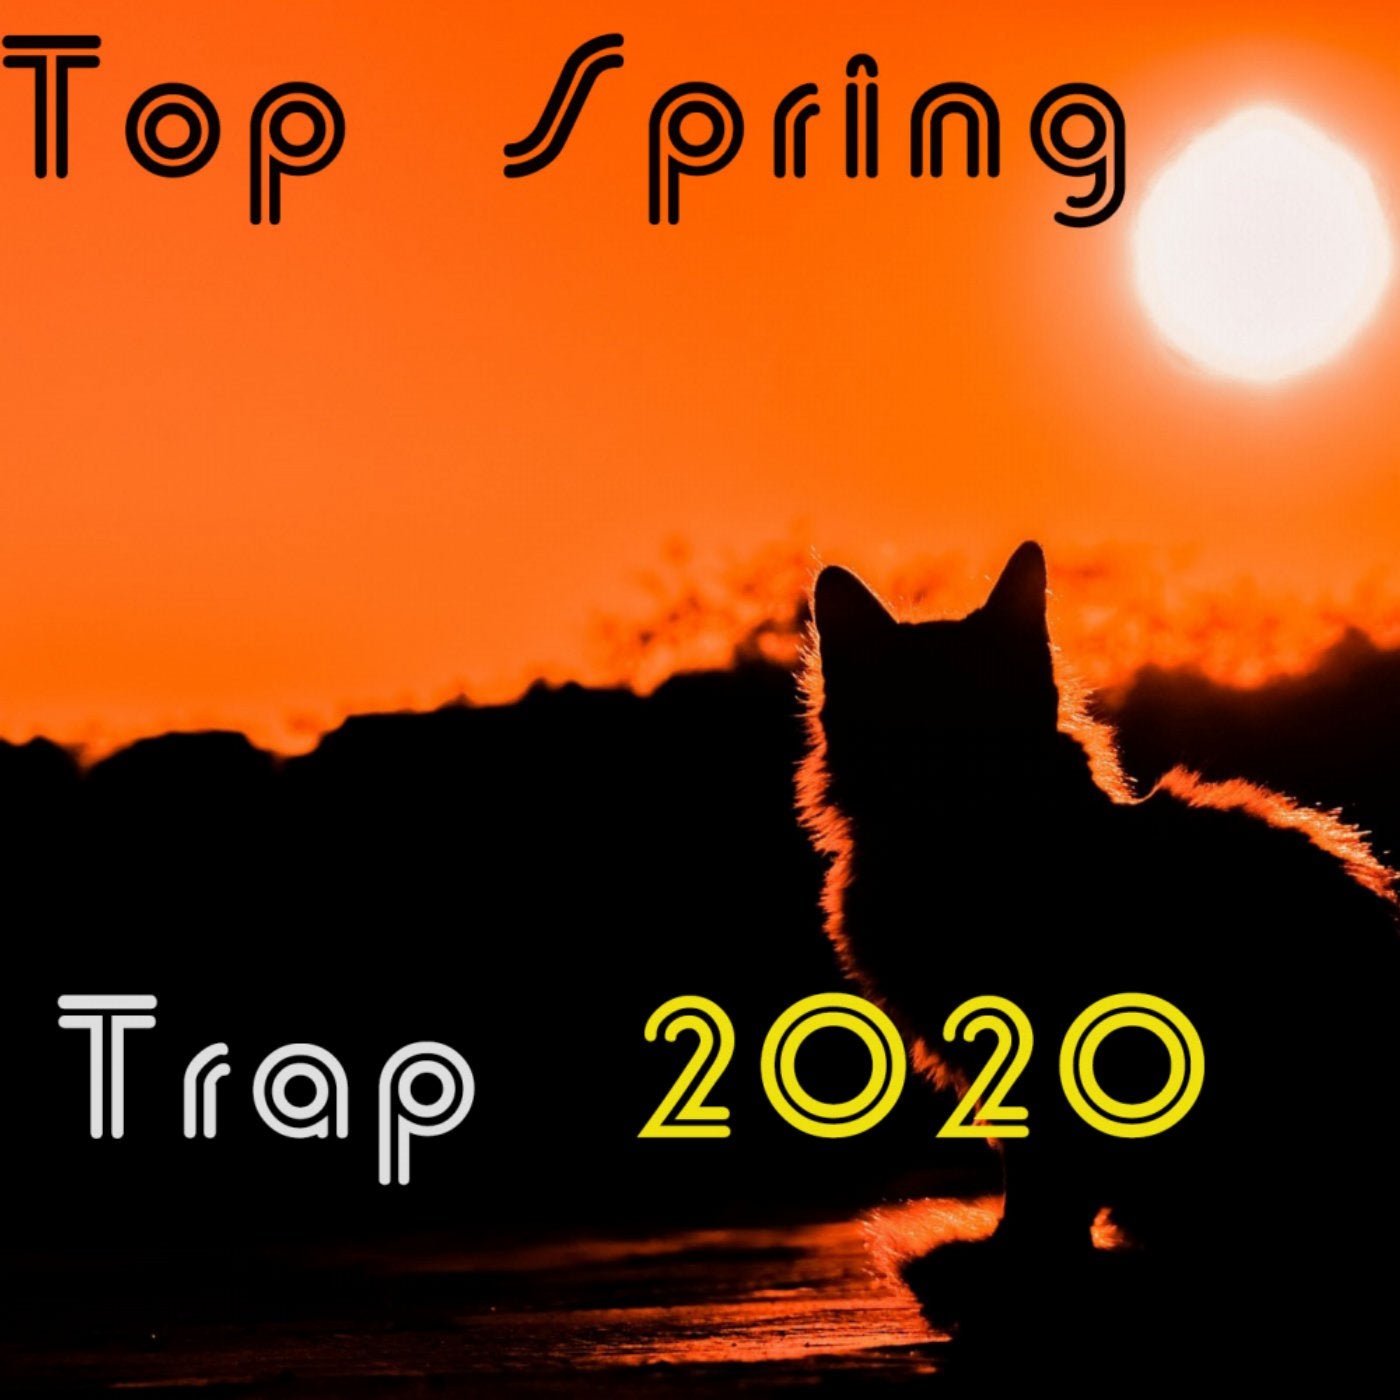 Top Spring Trap 2020